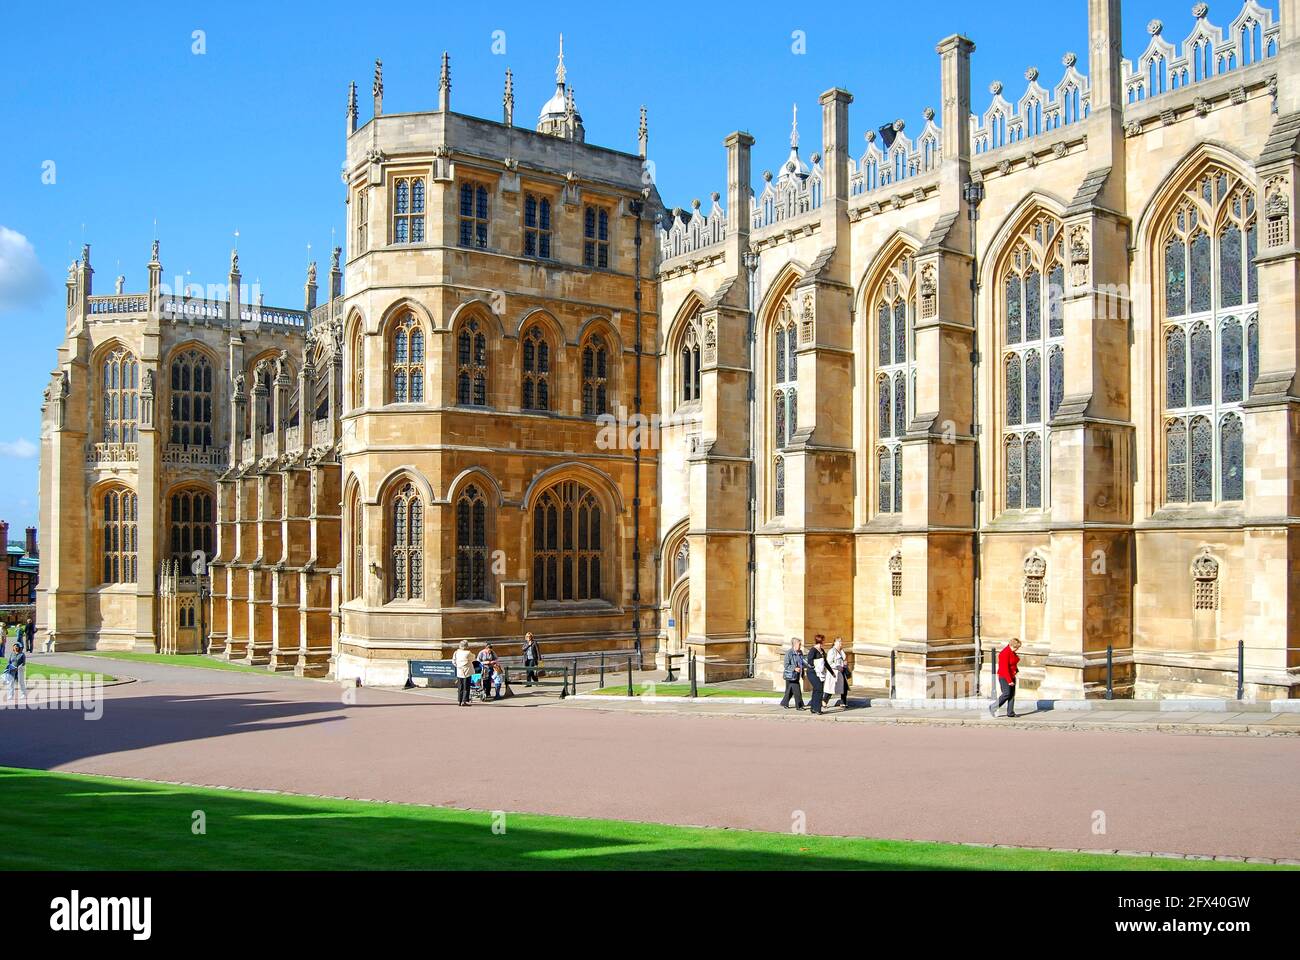 La capilla de San Jorge, Bajar Ward, El Castillo de Windsor, Windsor, Berkshire, Inglaterra, Reino Unido Foto de stock